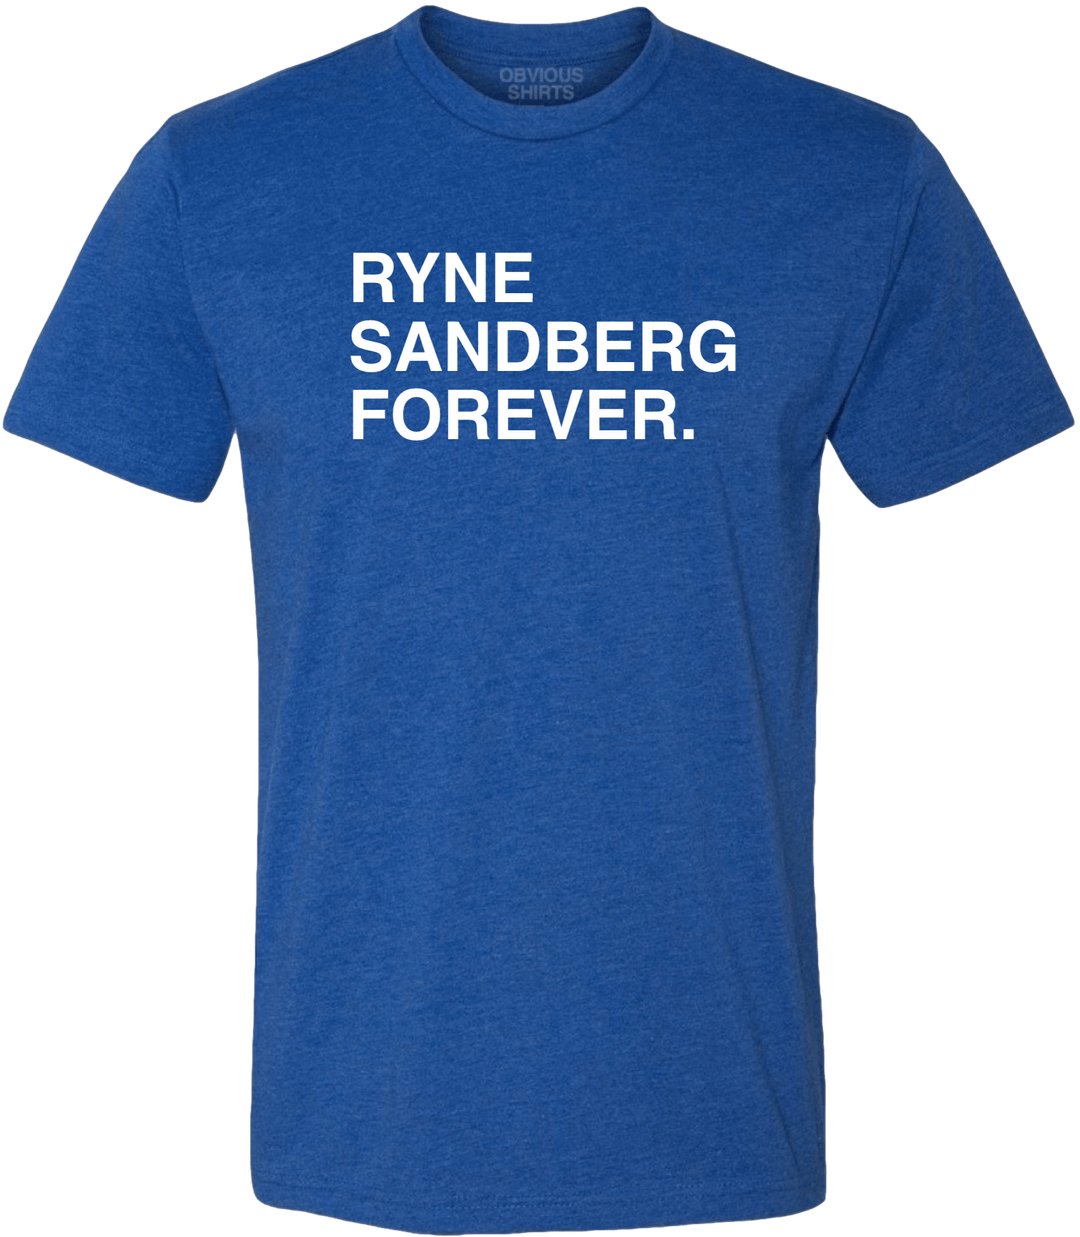 RYNE SANDBERG FOREVER. - OBVIOUS SHIRTS